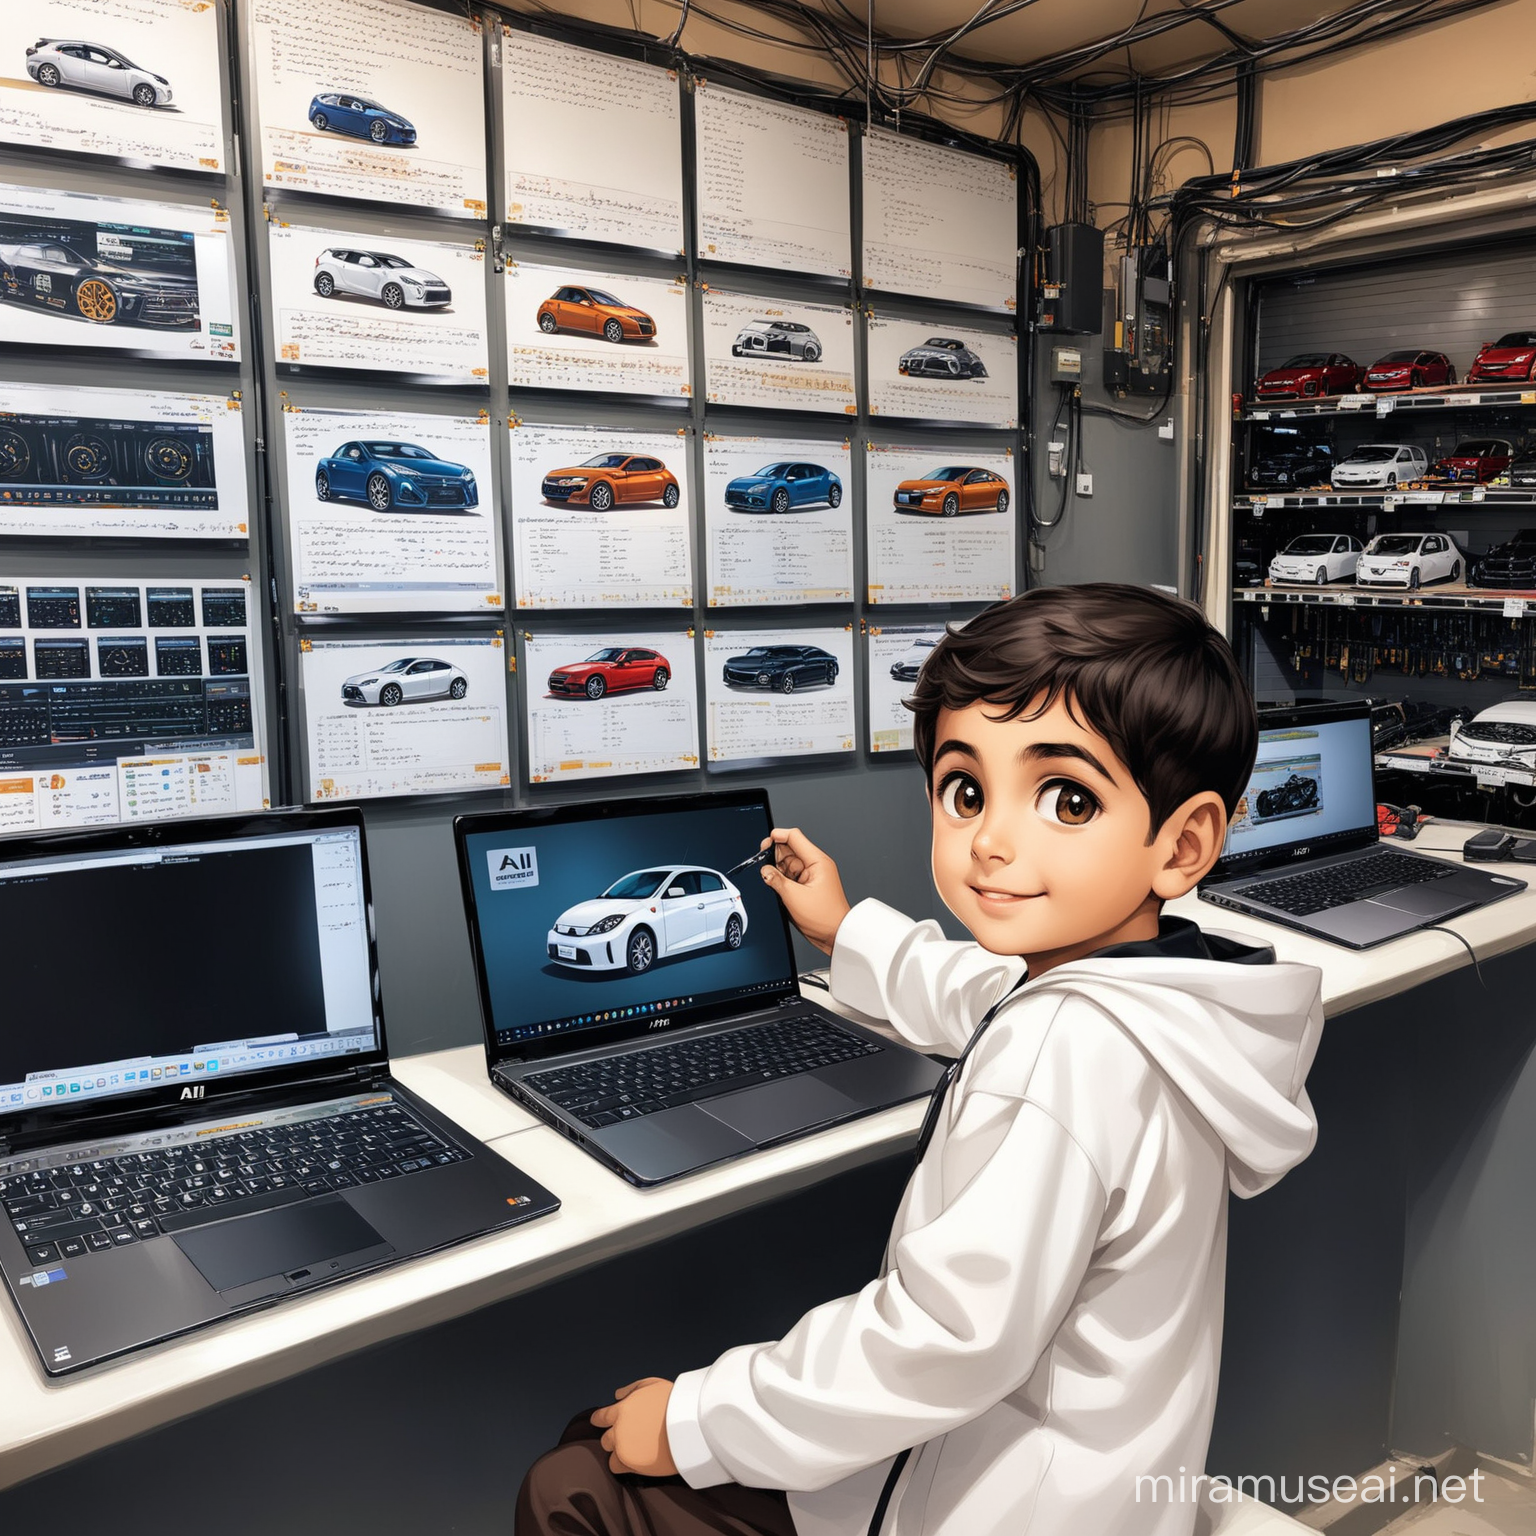 Persian Little Boy Engineer Repairing Modern HighTech Car Samandcr in Advanced Auto Repair Shop